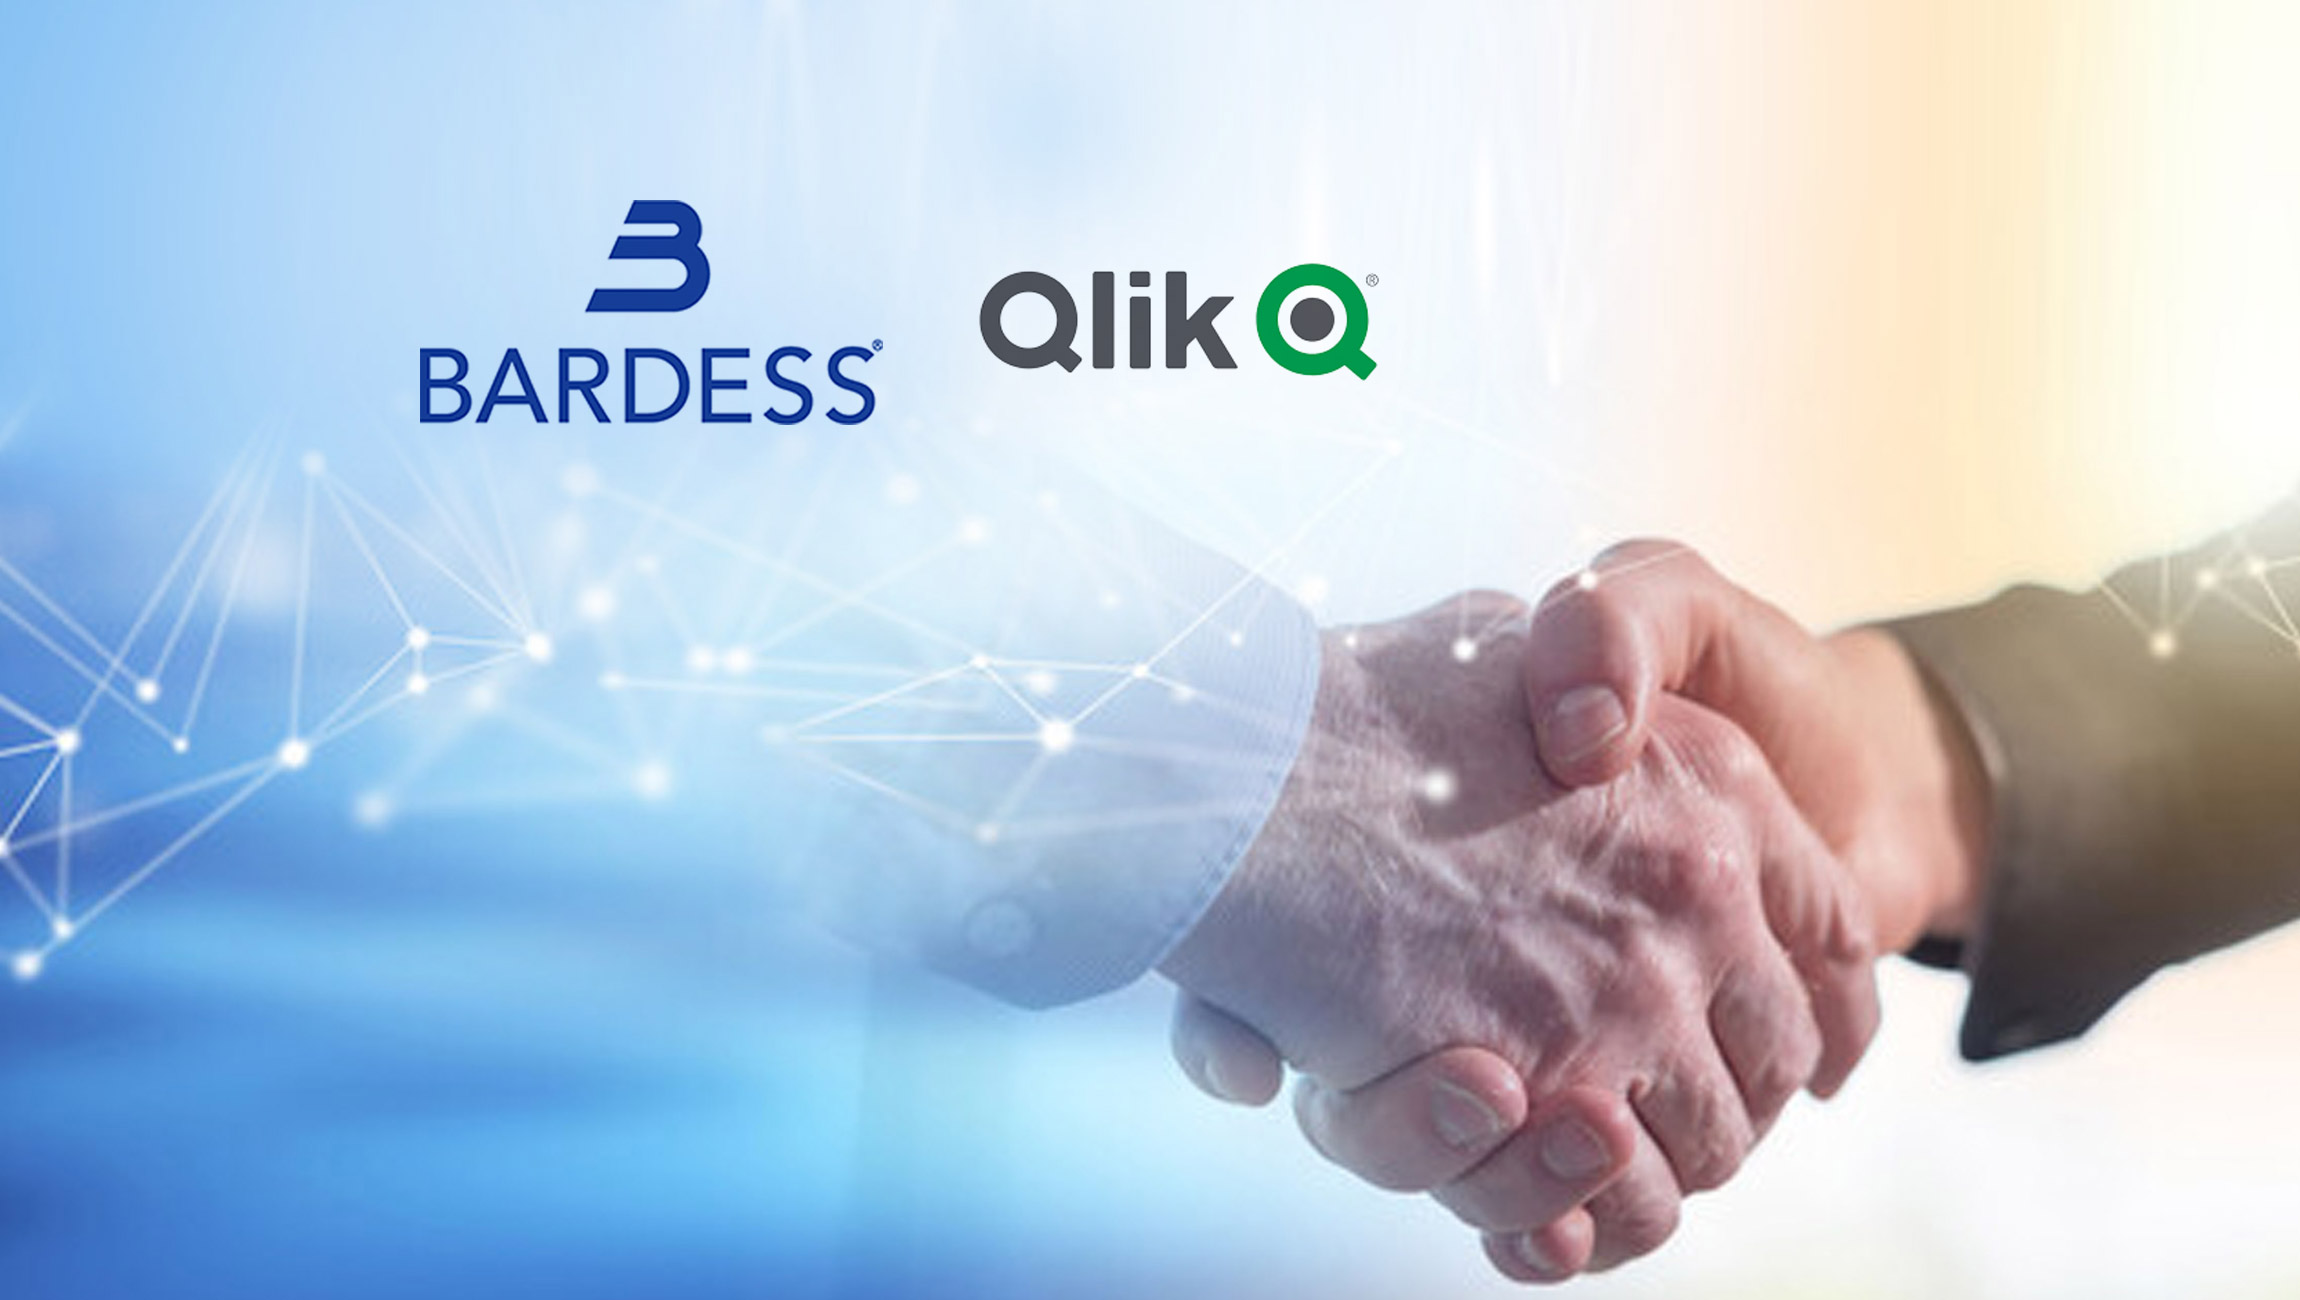 Bardess-Group-Ltd.-Named-Qlik-Enterprise-Partner-of-the-Year